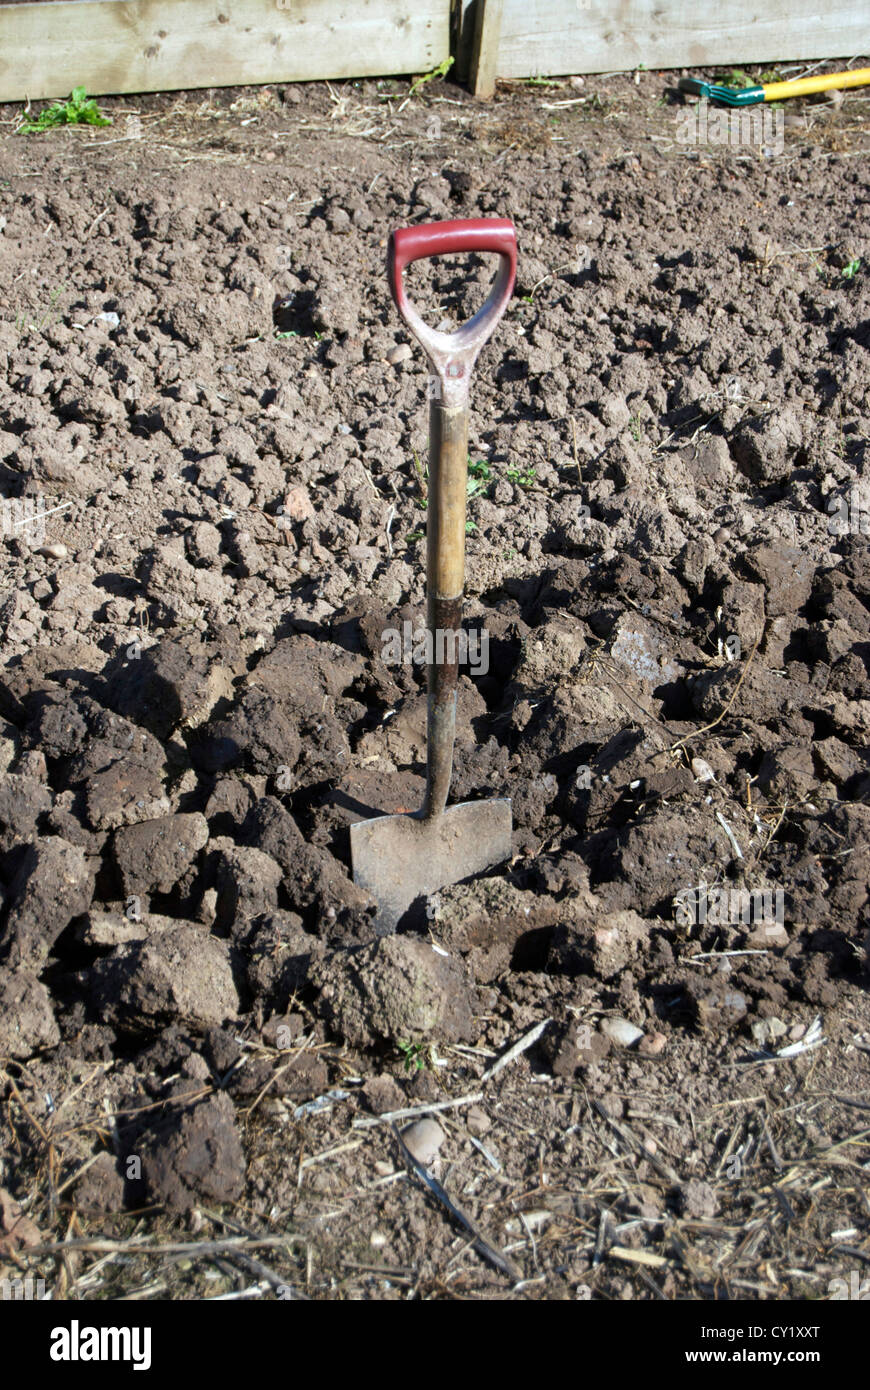 Spade dug into soil in allotment Stock Photo